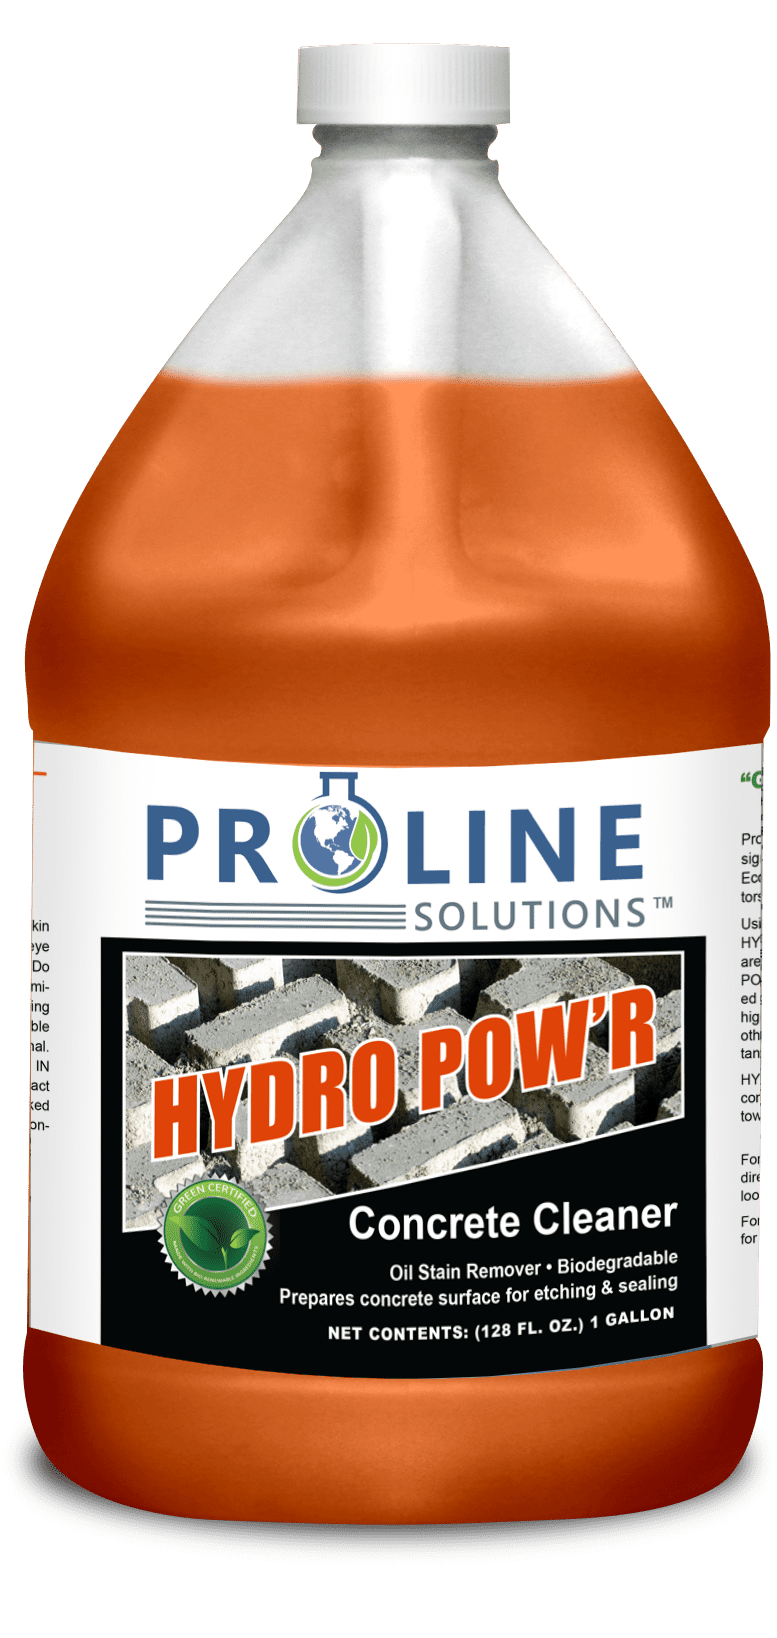 HYDRO POW’R Concrete Cleaner